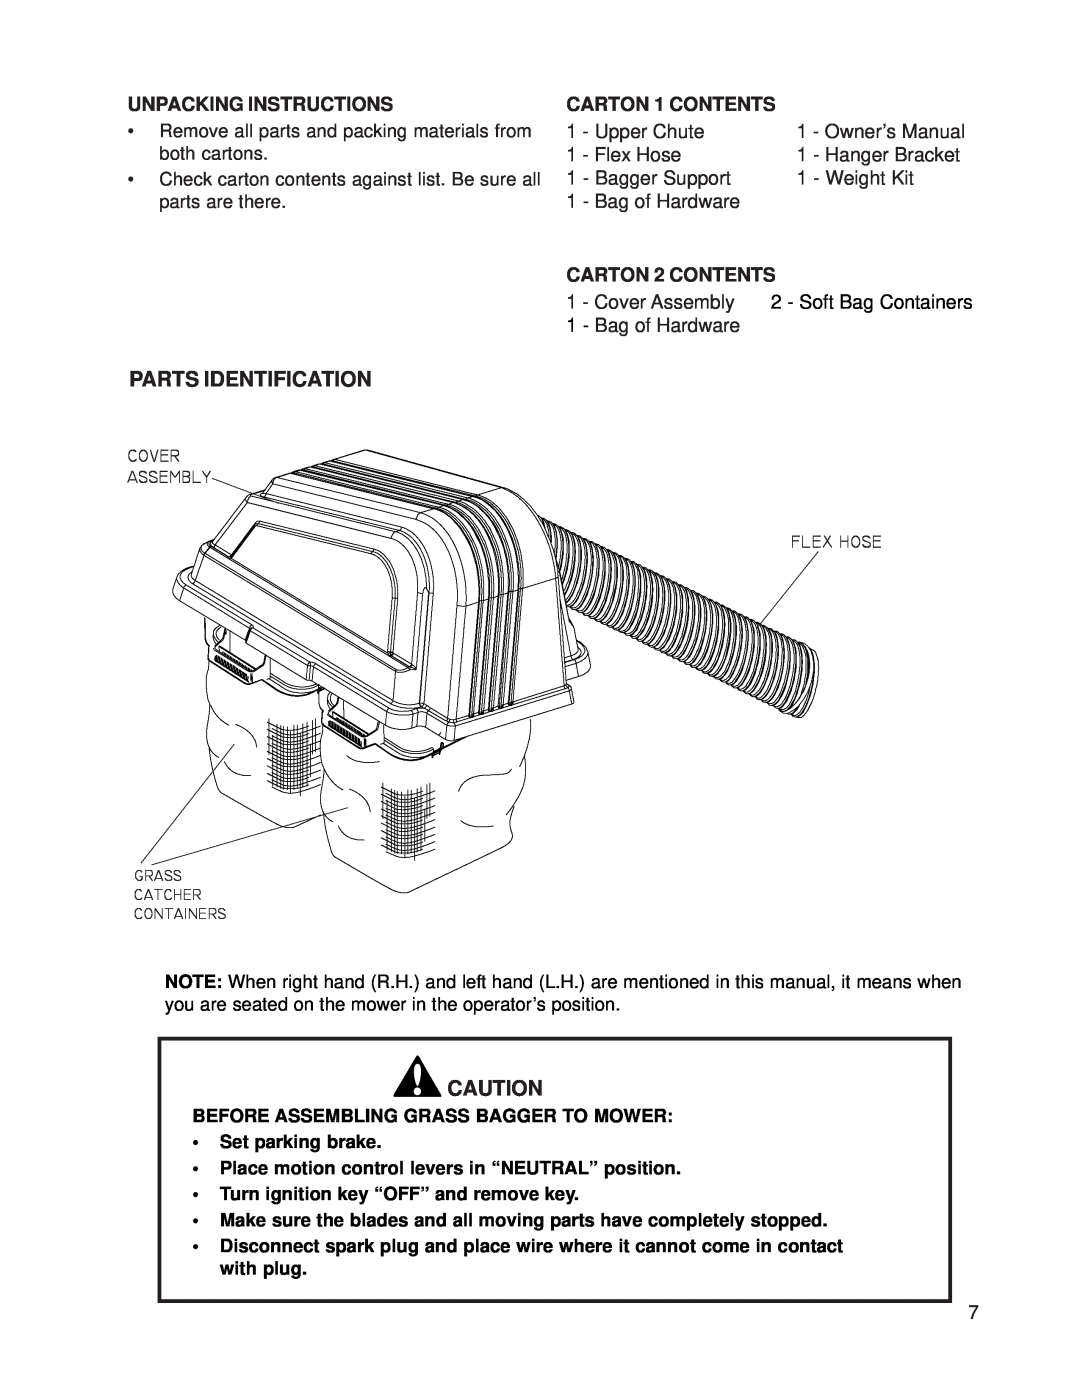 Dixon 539 131301 Parts Identification, Unpacking Instructions, Upper Chute, Owner’s Manual, Flex Hose, Hanger Bracket 